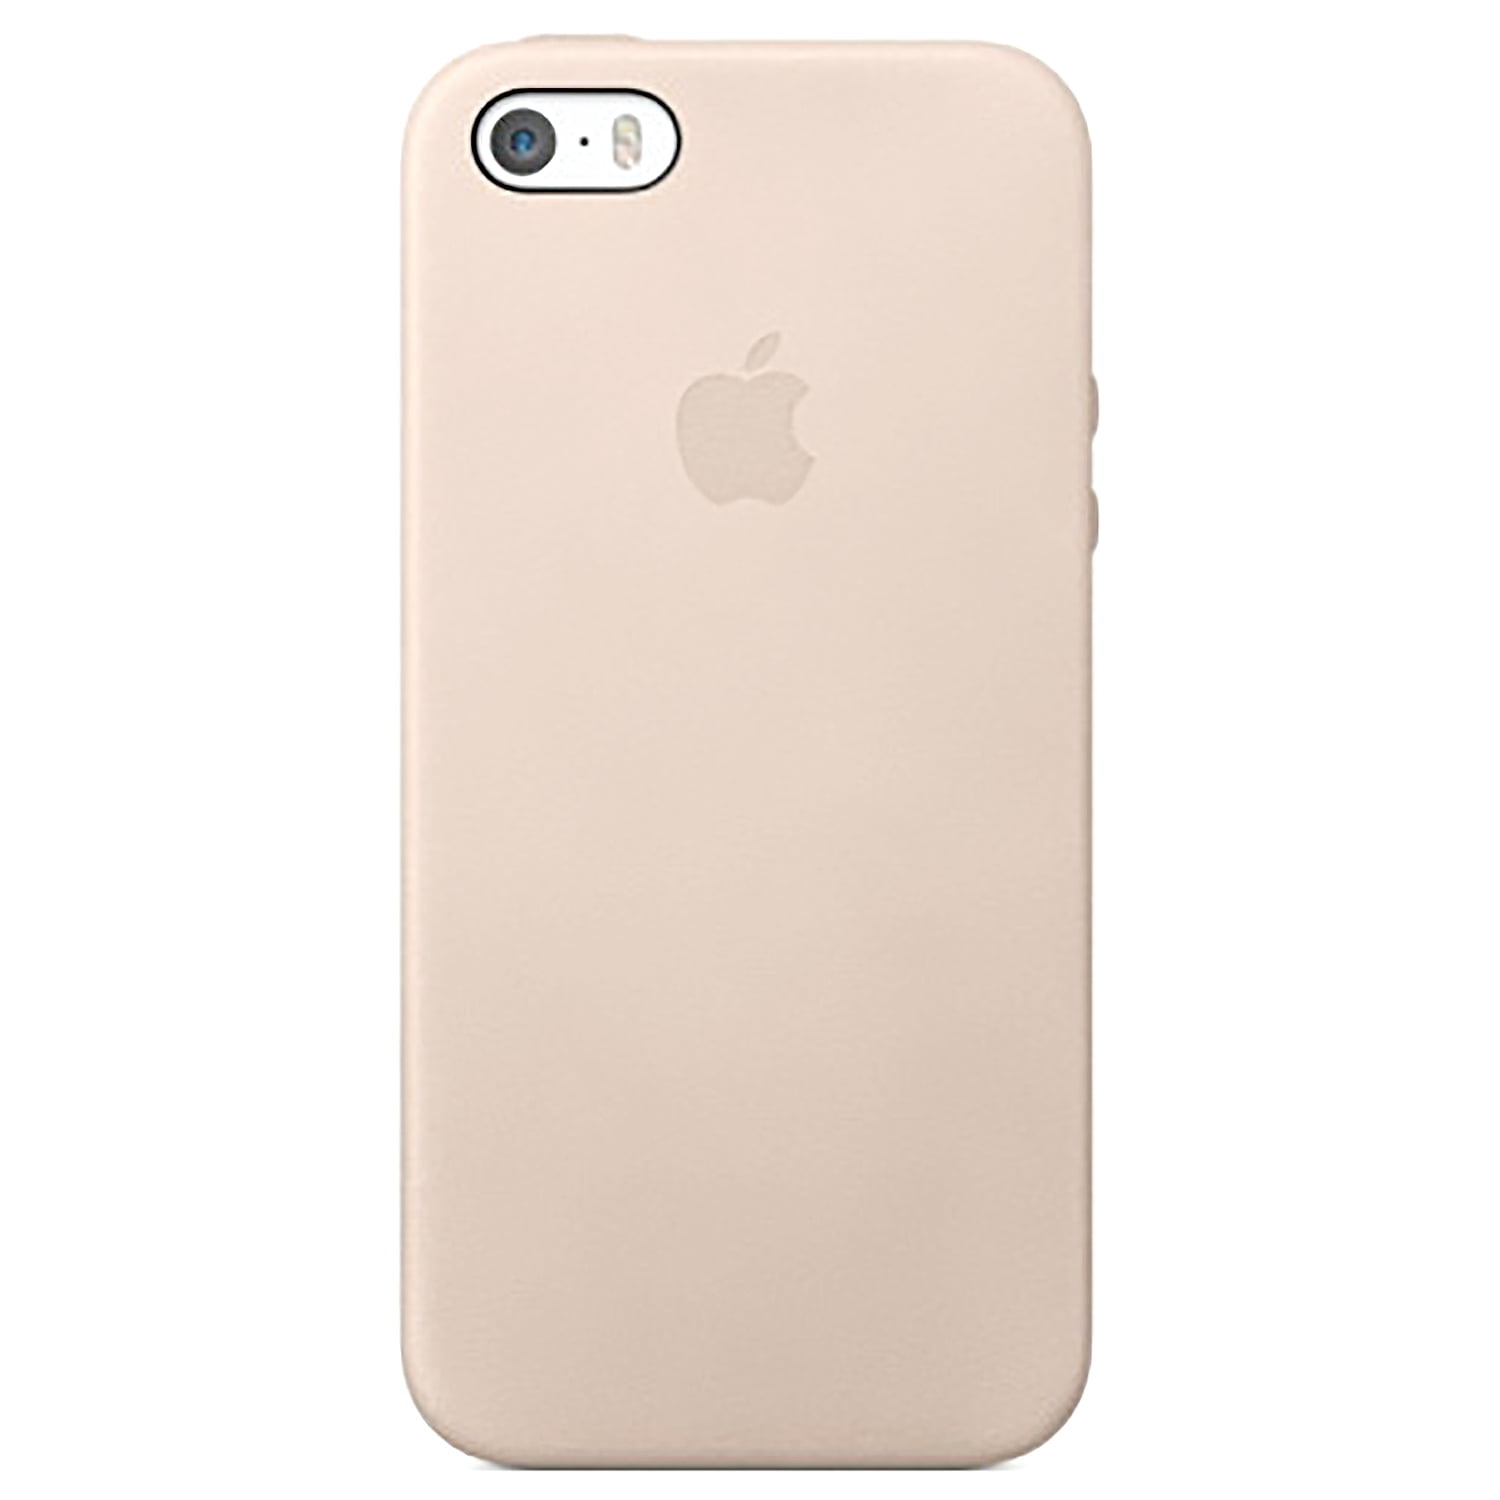 Se apple корпус. Чехол Apple iphone 5s Case. Apple Leather Case чехол для iphone 5/5s/se. Leather Case для iphone 5, 5s, se. Айфон Эппл 5 с чехол.